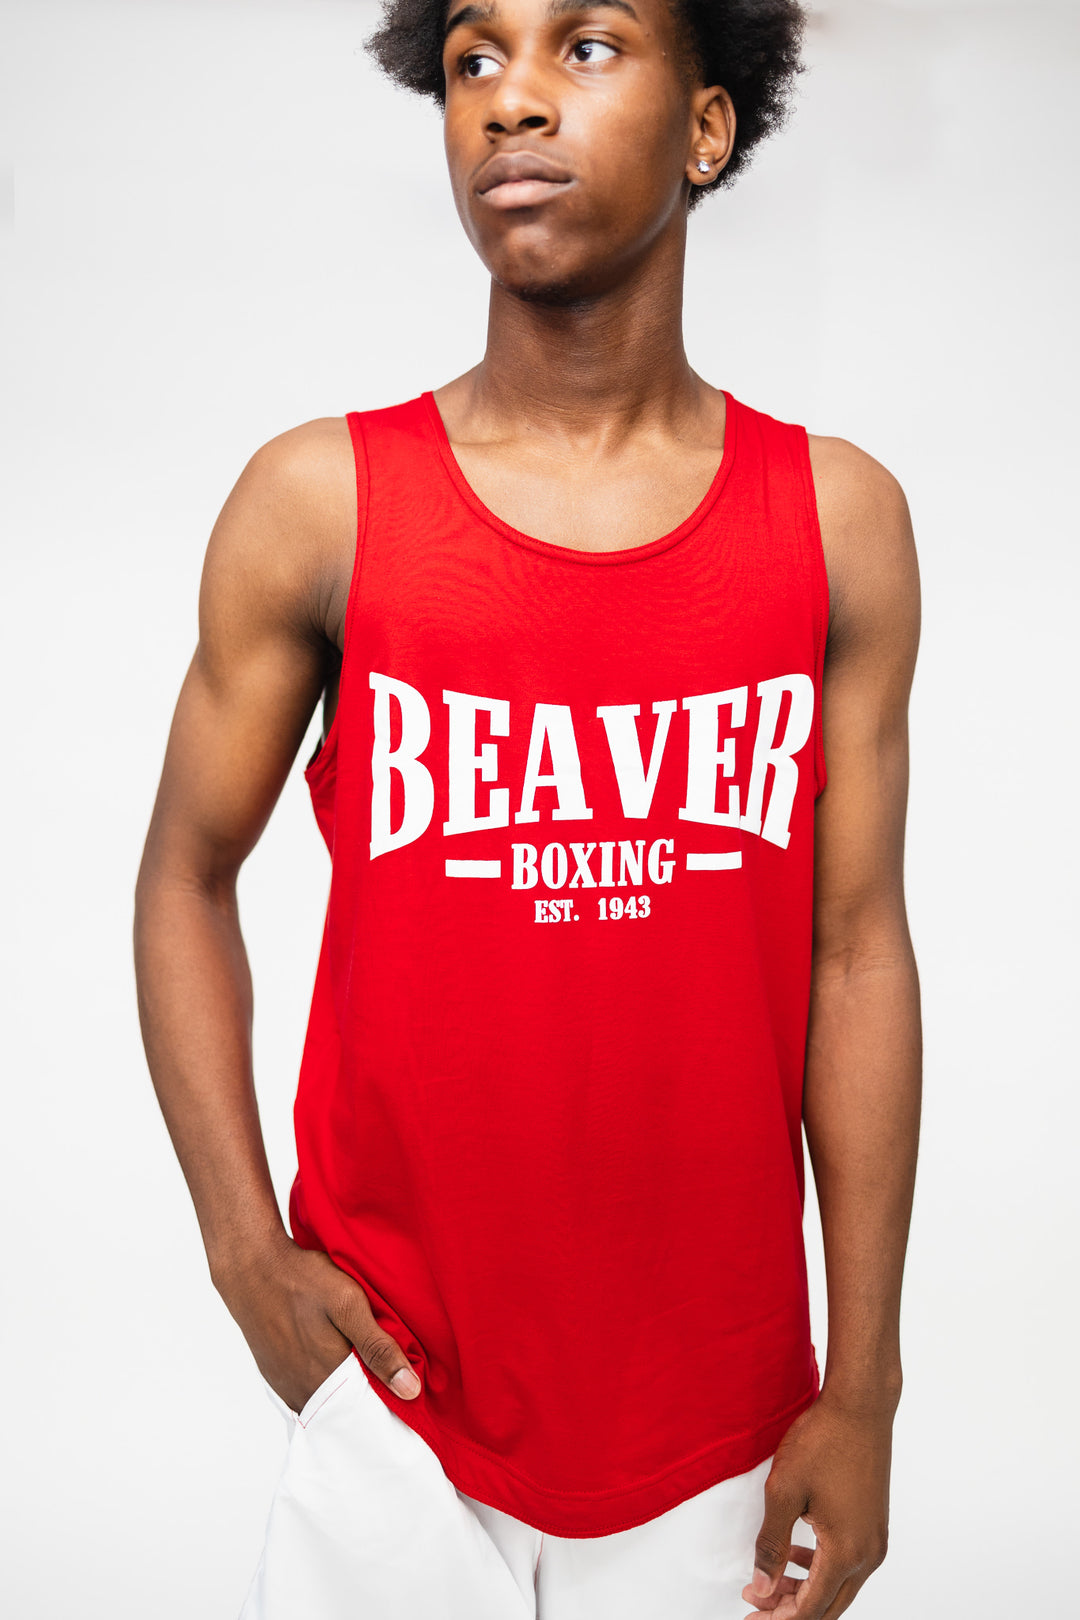 Beaver Boxing TANK TOP EST. 1943 - RED